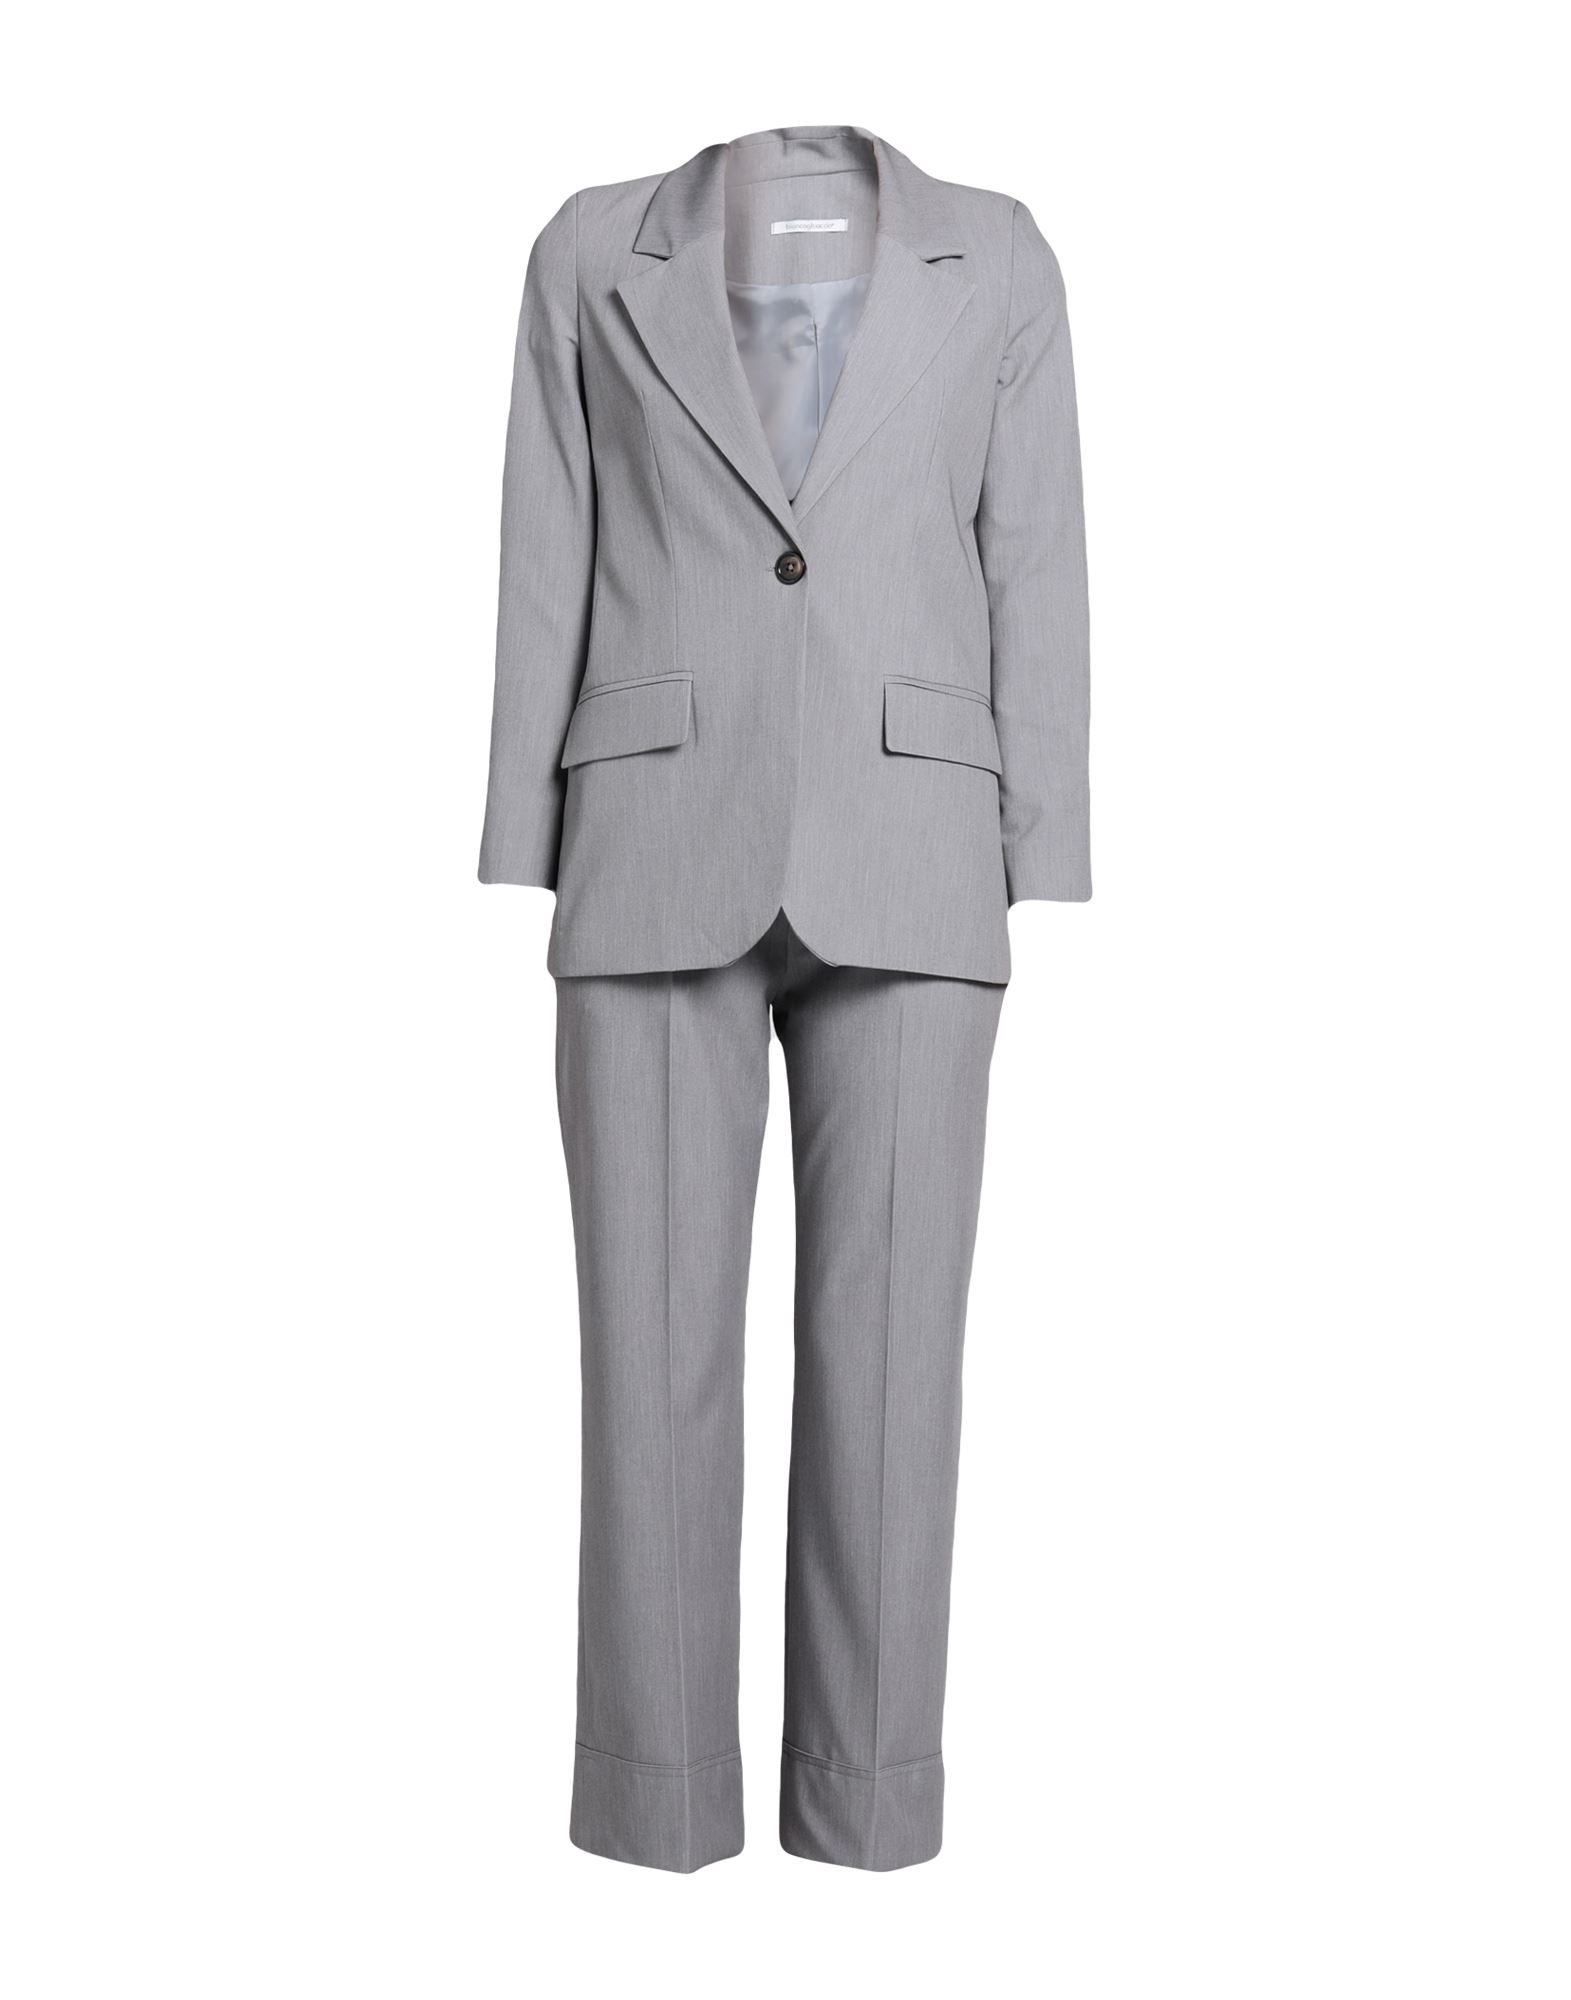 Biancoghiaccio Suits In Grey